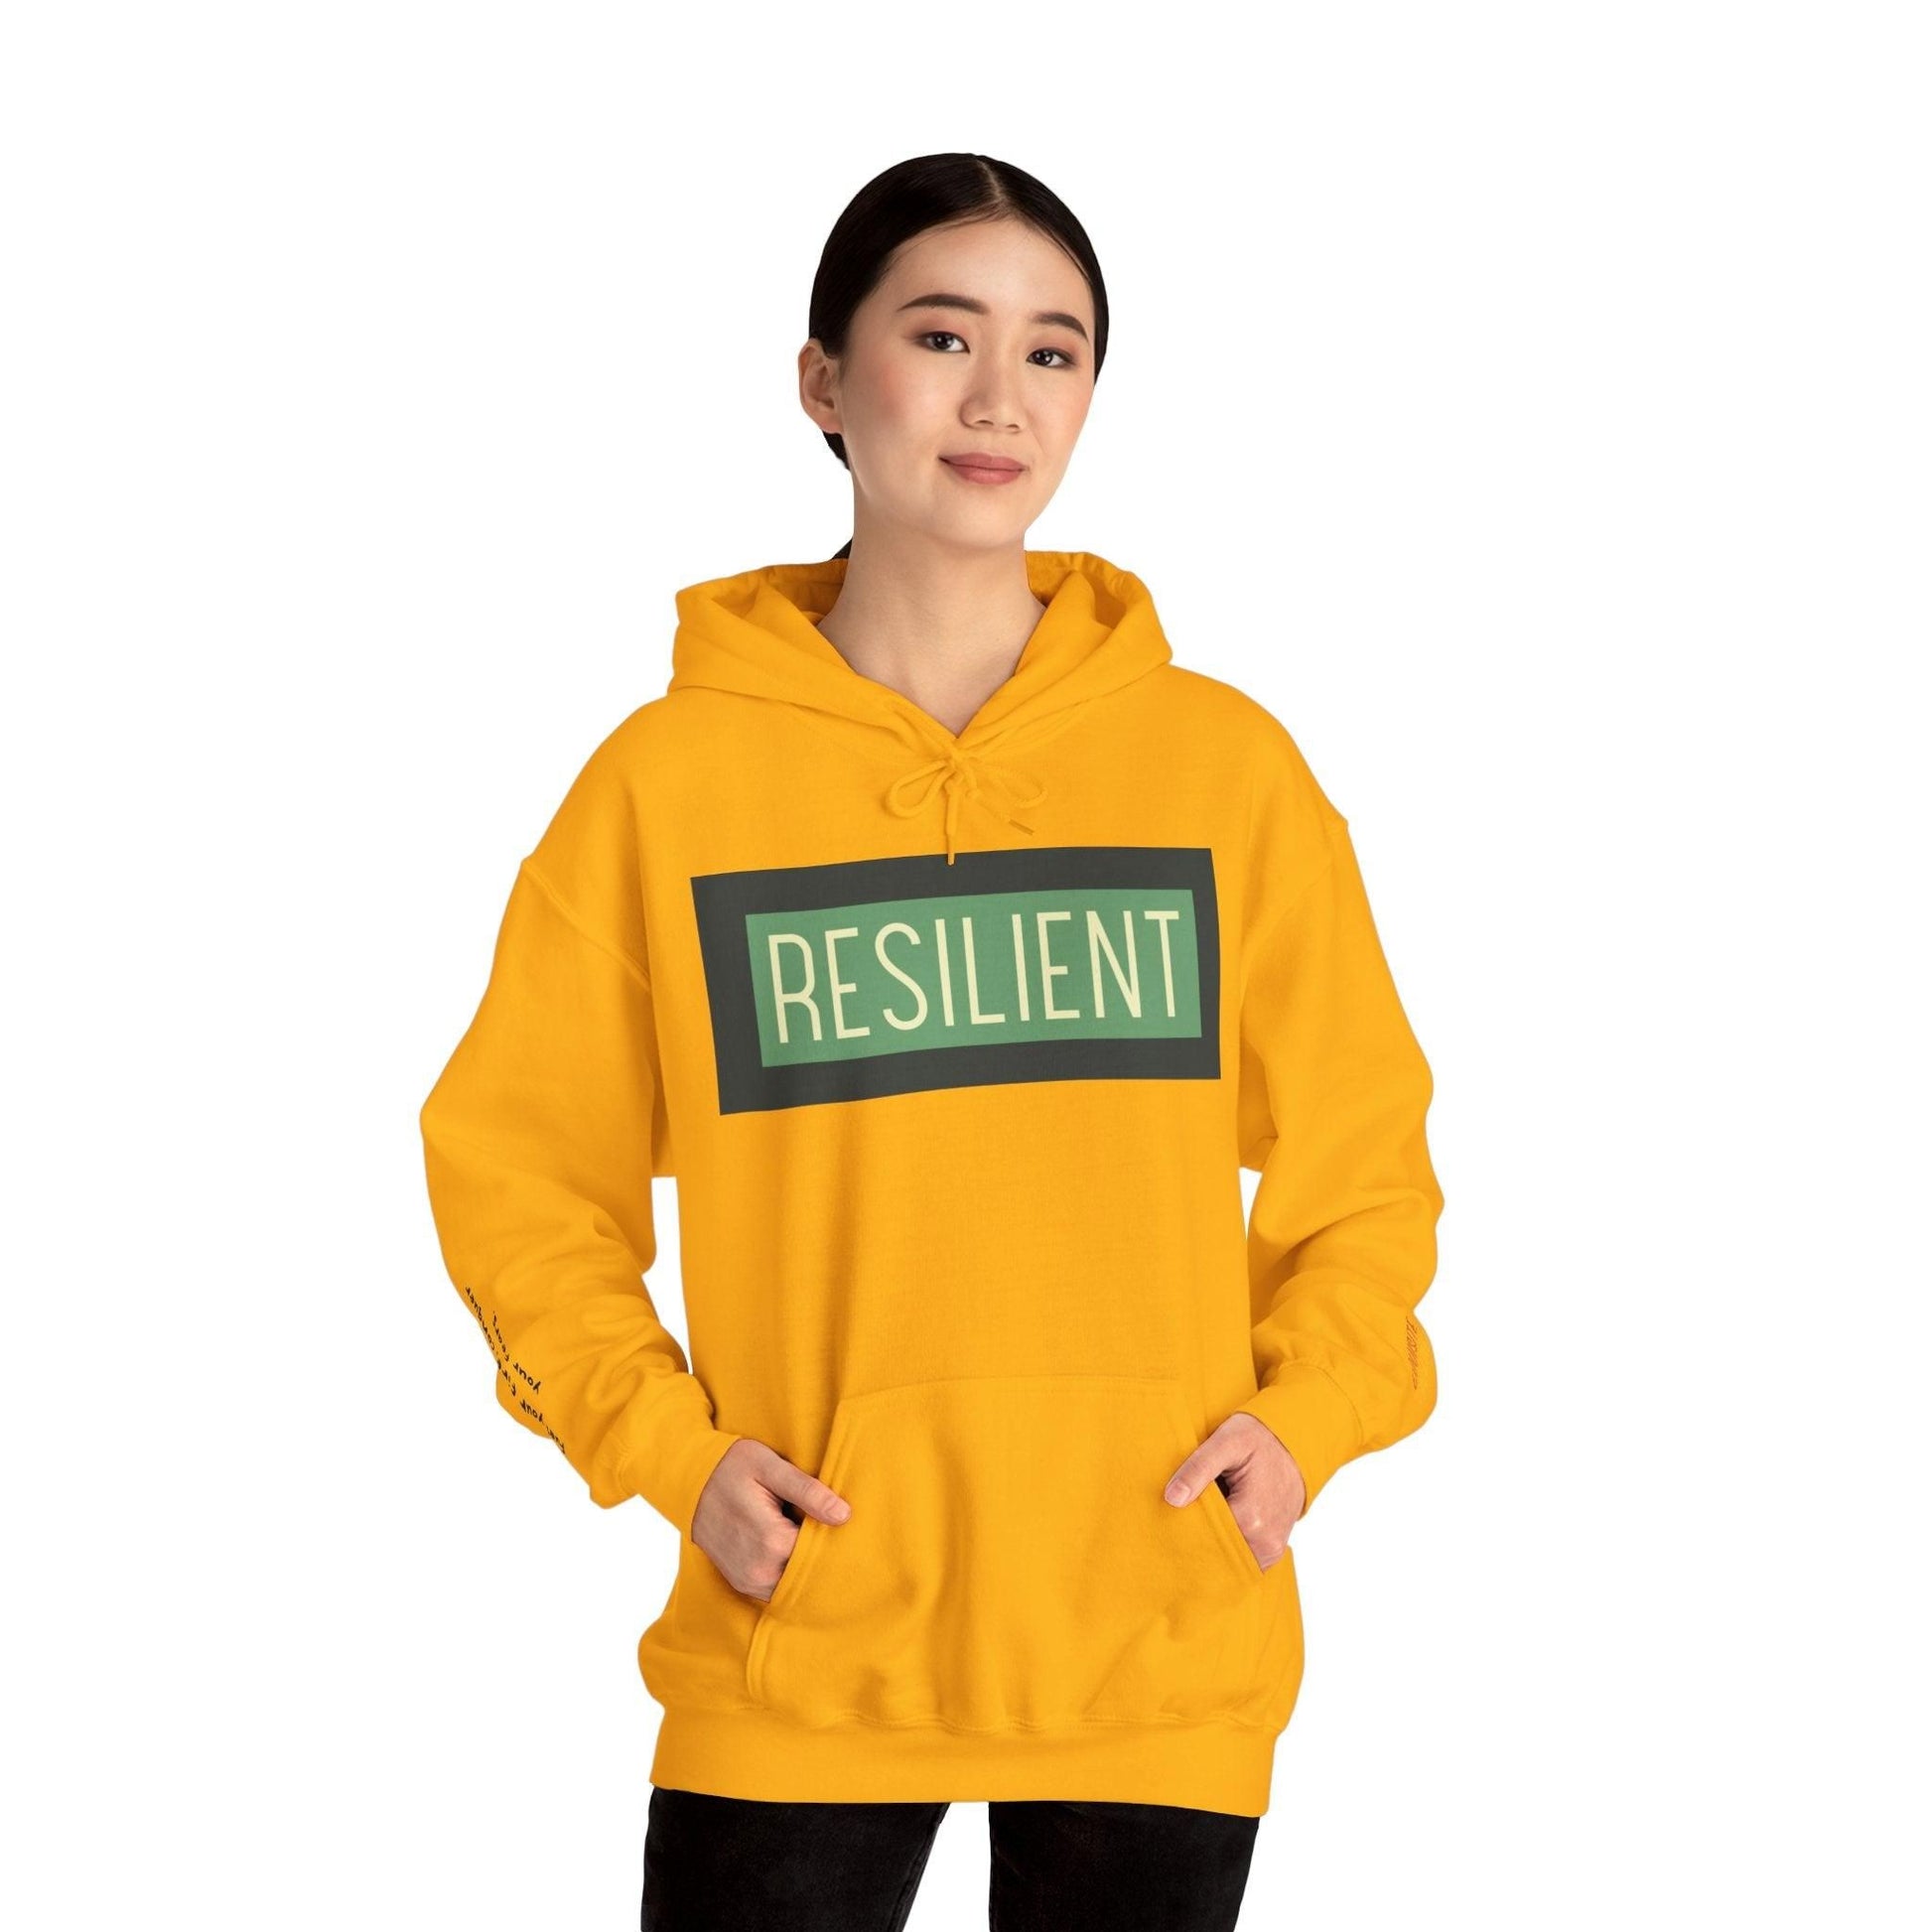 Resilient Unisex Heavy Blend Hooded Sweatshirt Hoodie Gold S 